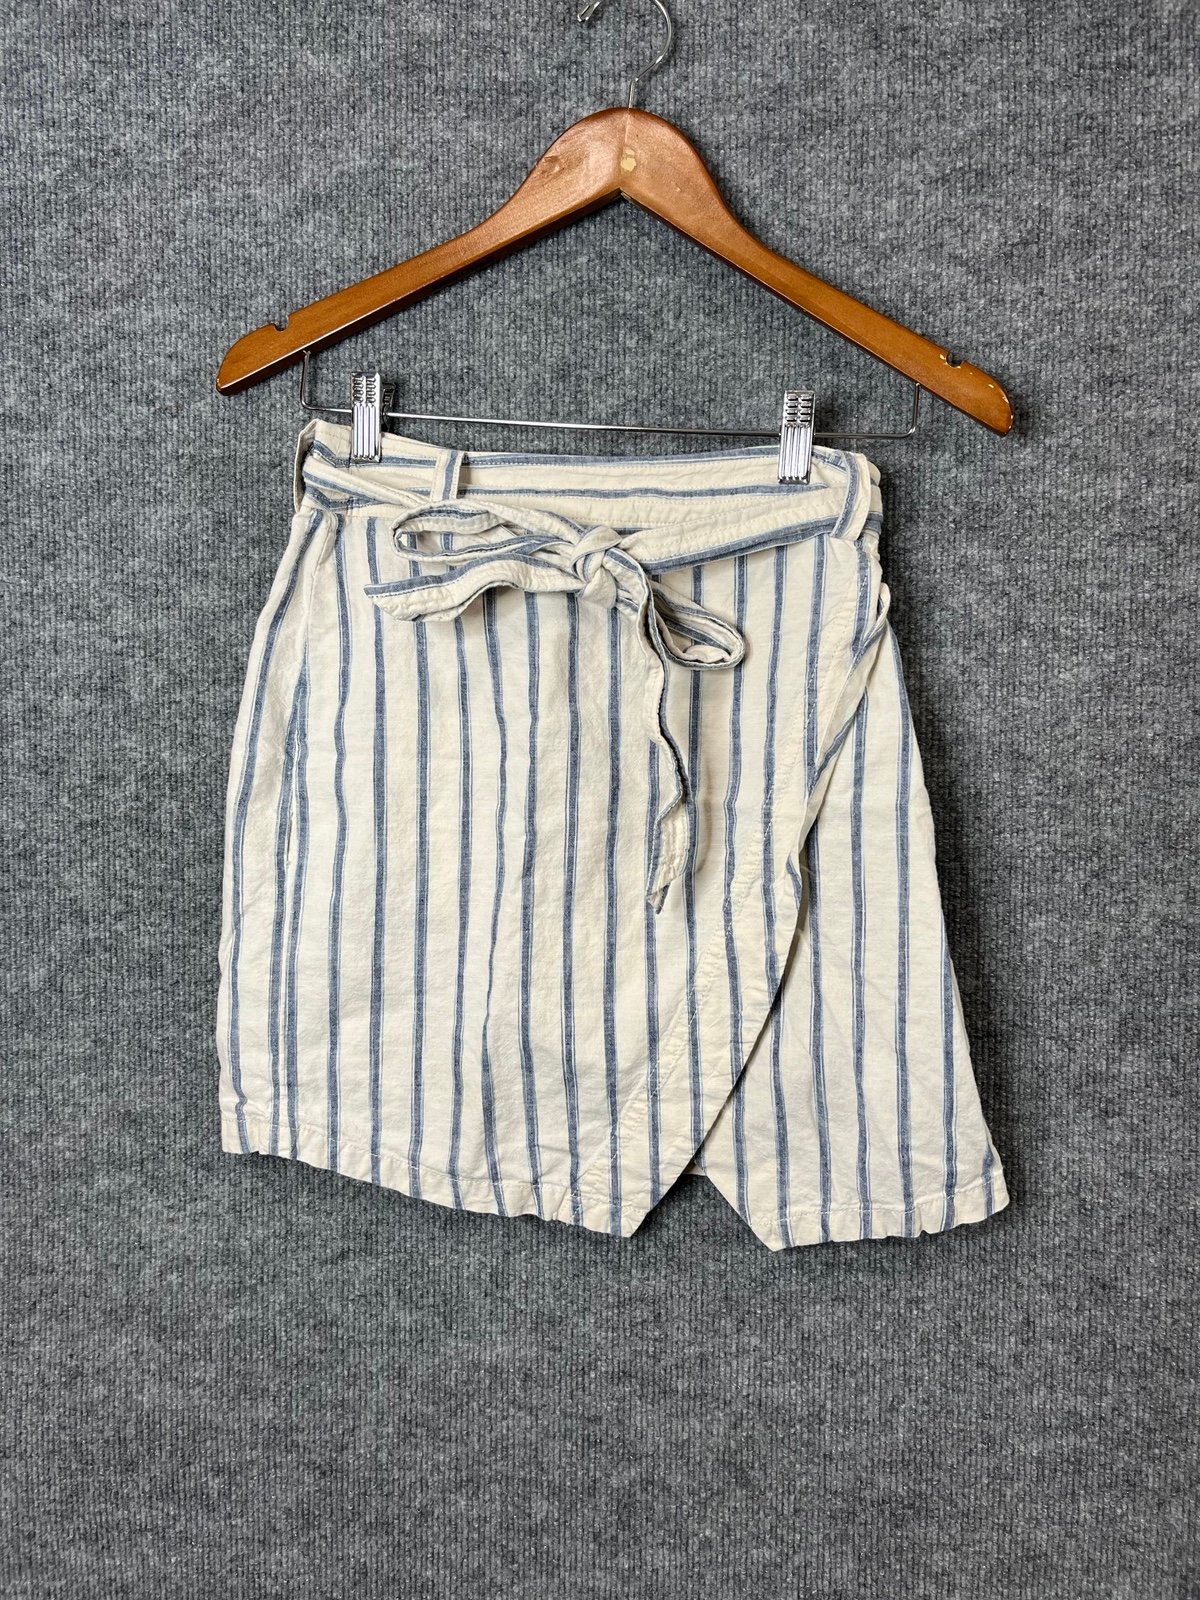 Nice Madewell portside striped linen mini skirt size small iGeAzJSSY no tax